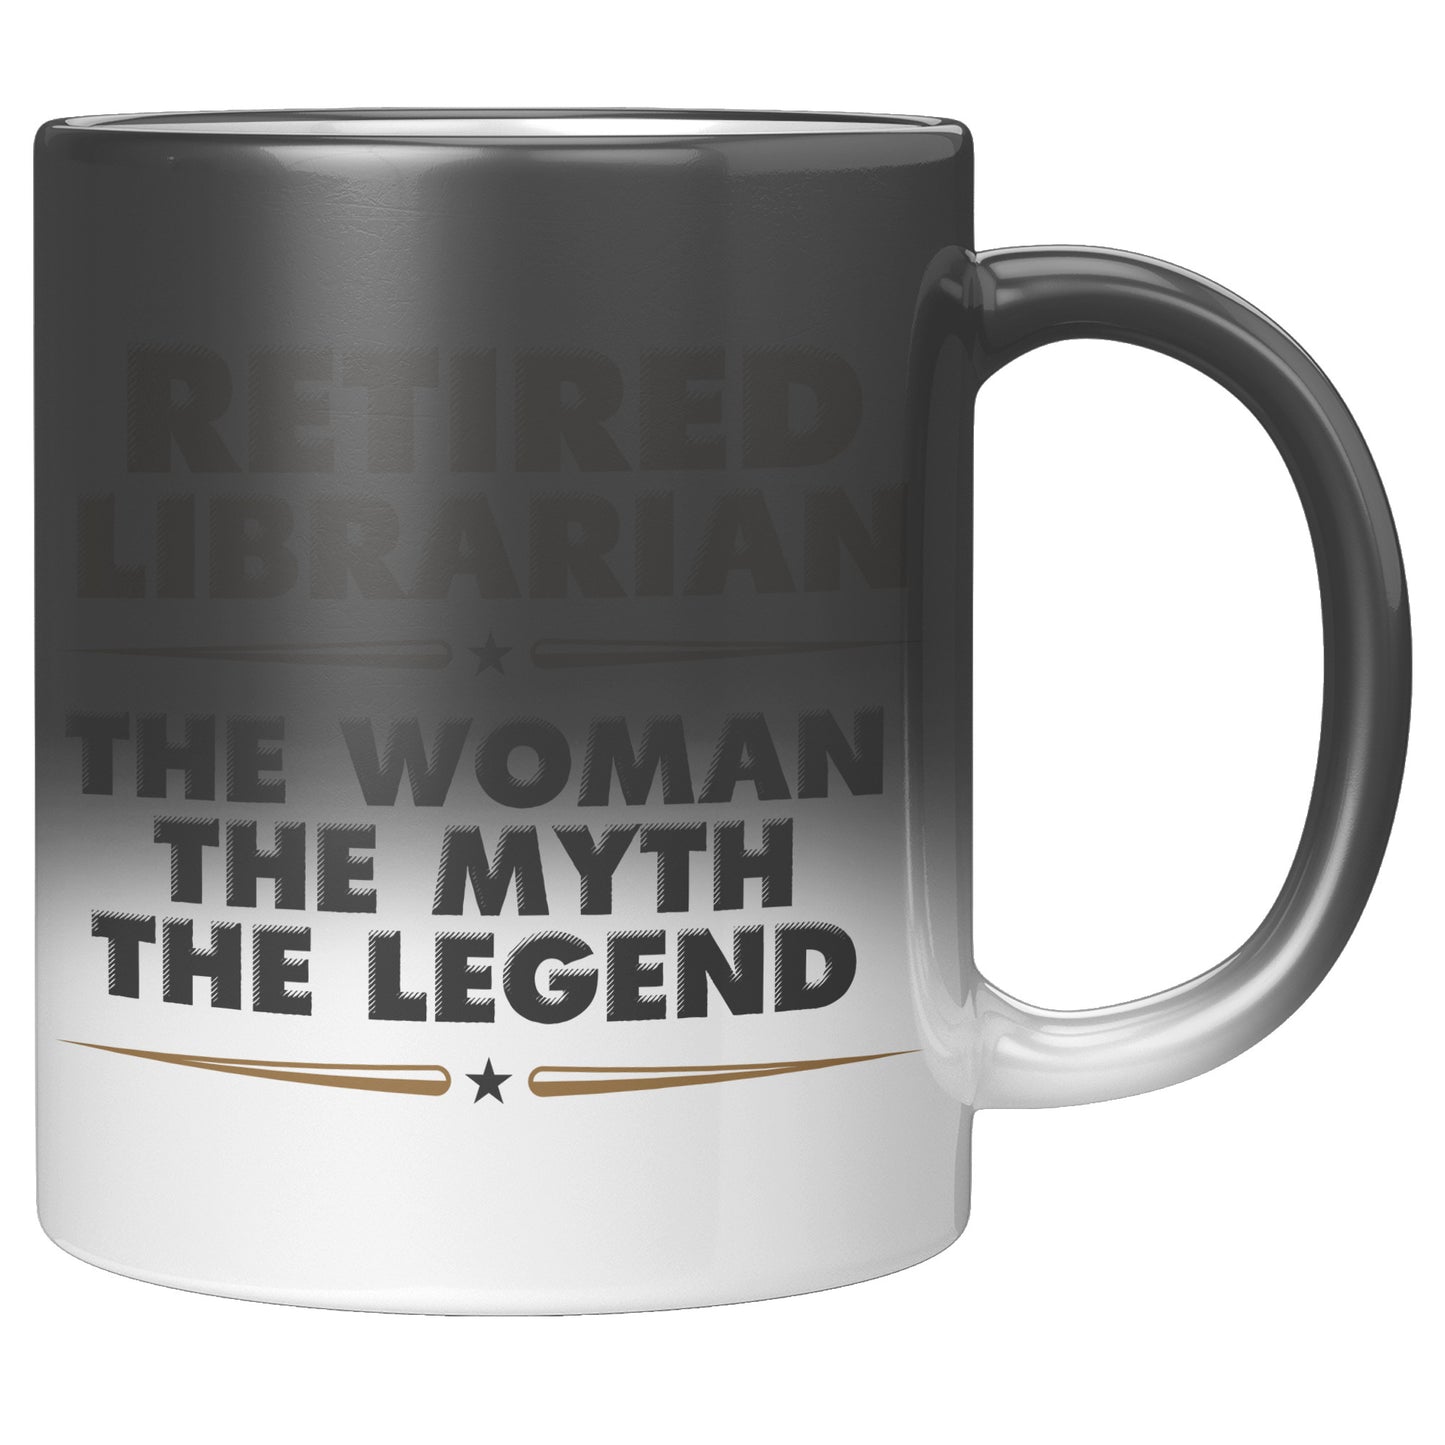 Retired Librarian. The Woman The Myth The Legend | Magic Mug